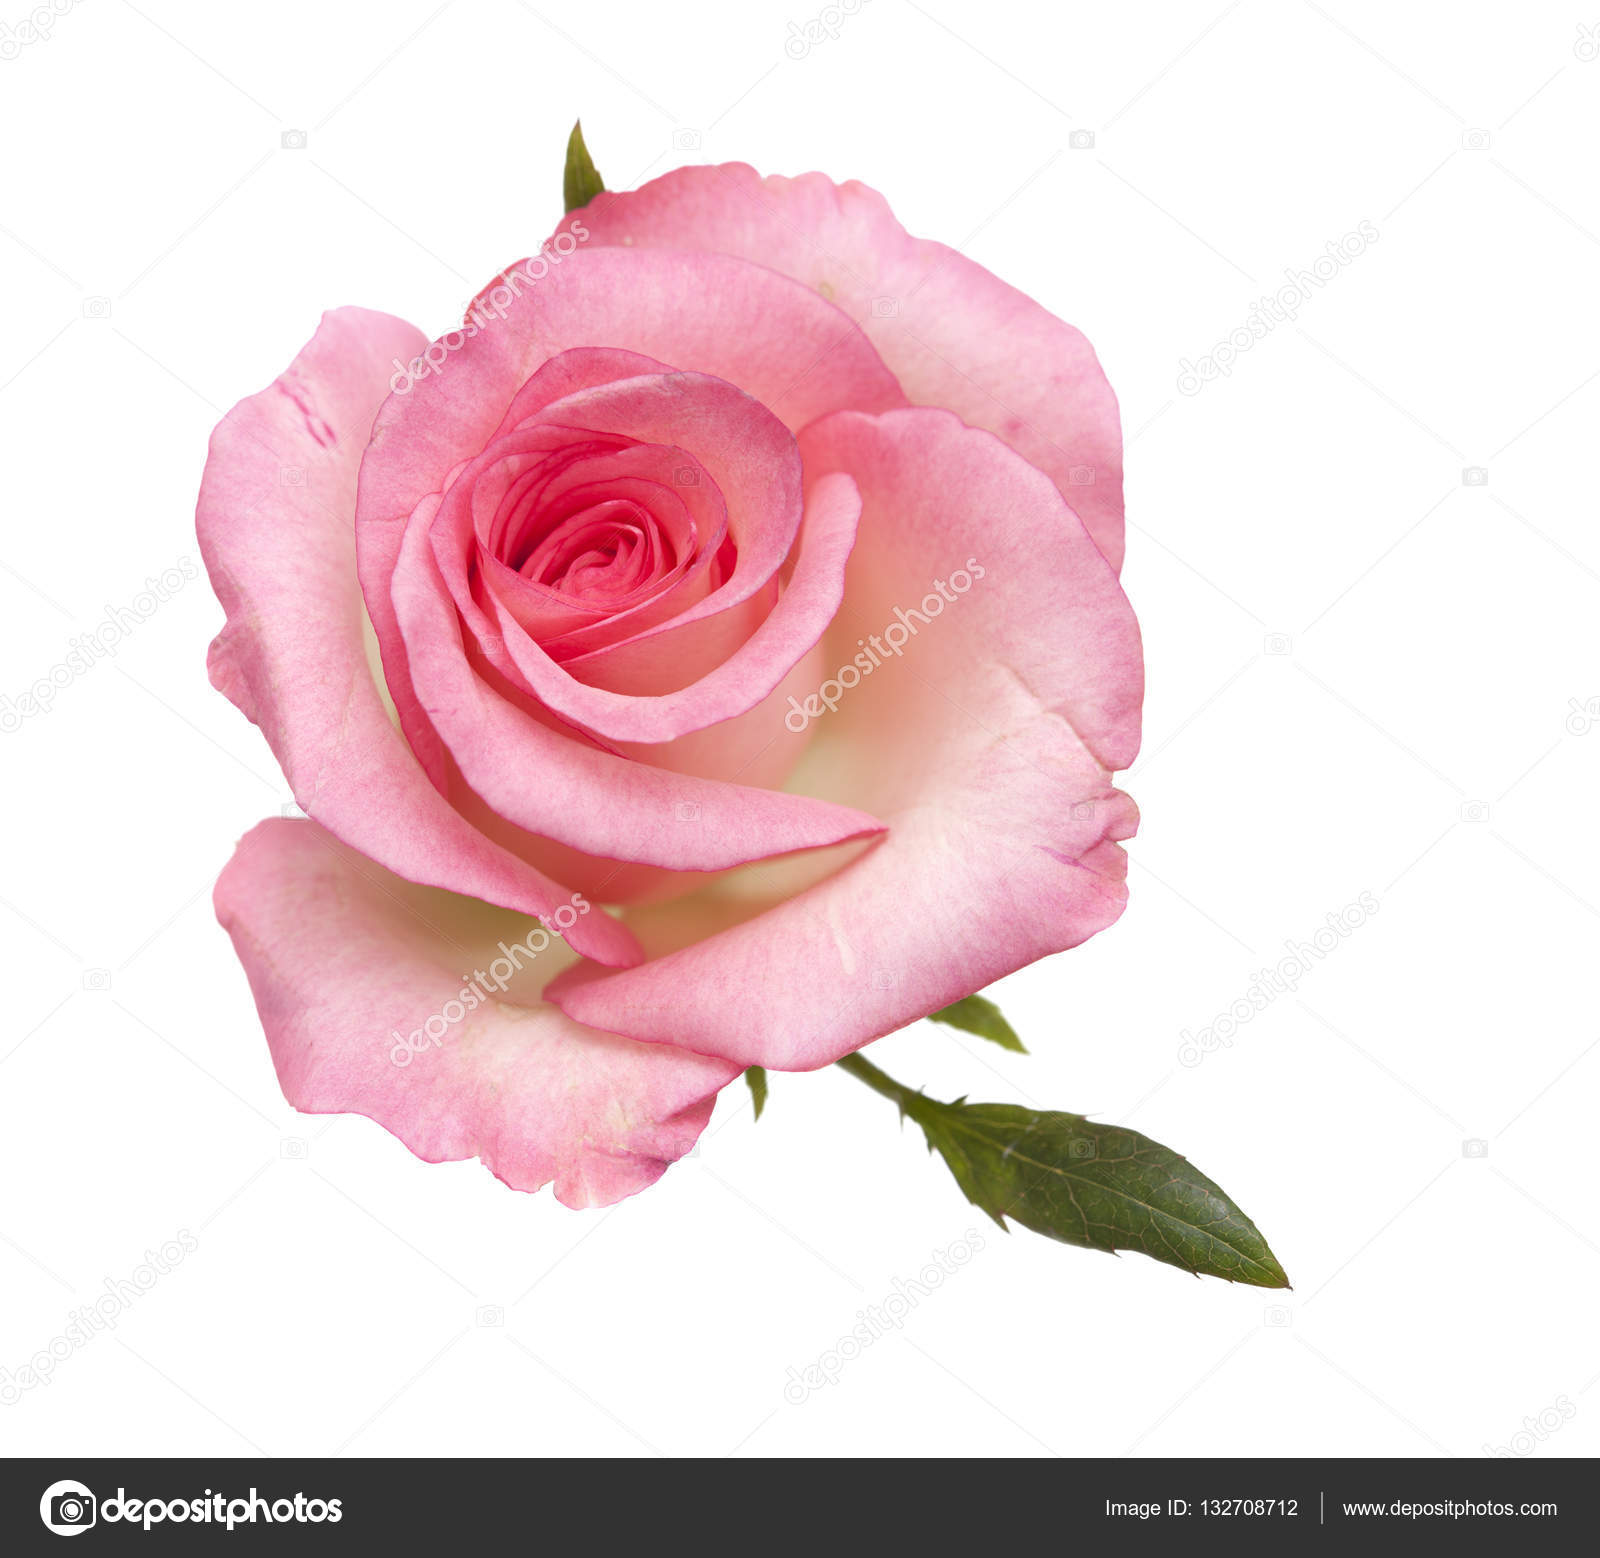 gentle pink rose isolated — Stock Photo © Tamara_k #132708712